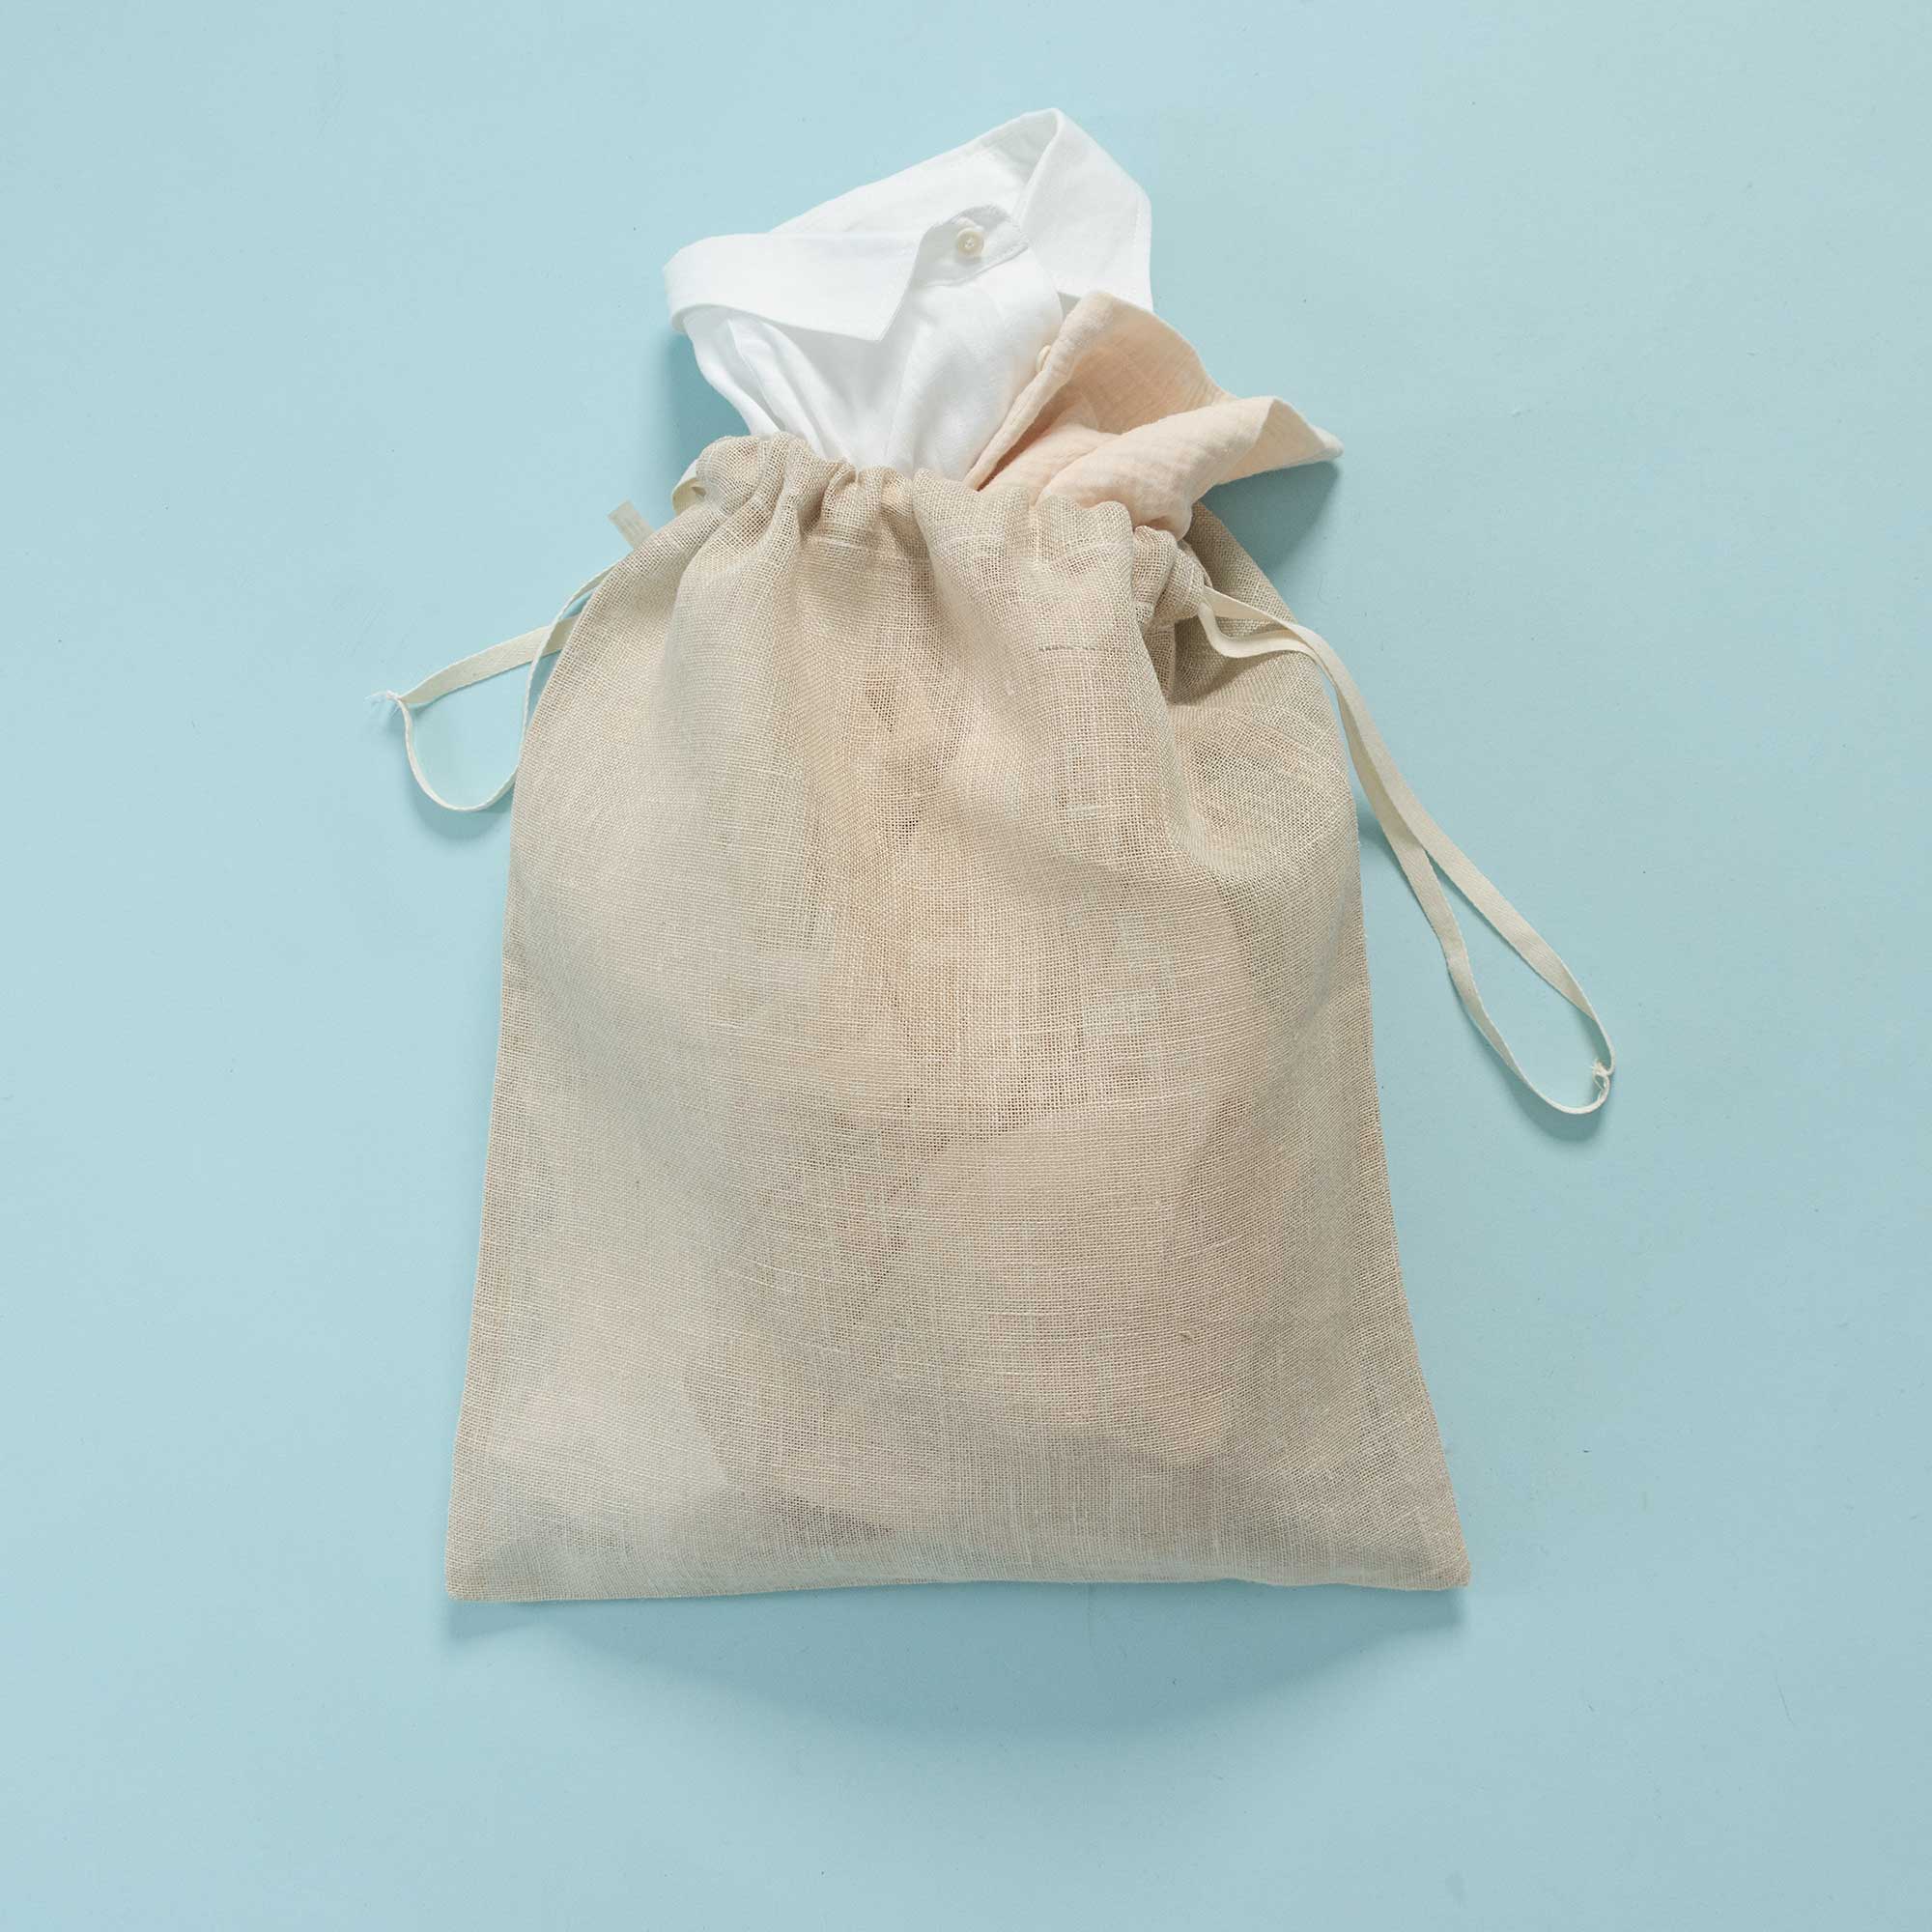 100% Organic Hemp Laundry Bag (Plastic-Free; Chemical-Free